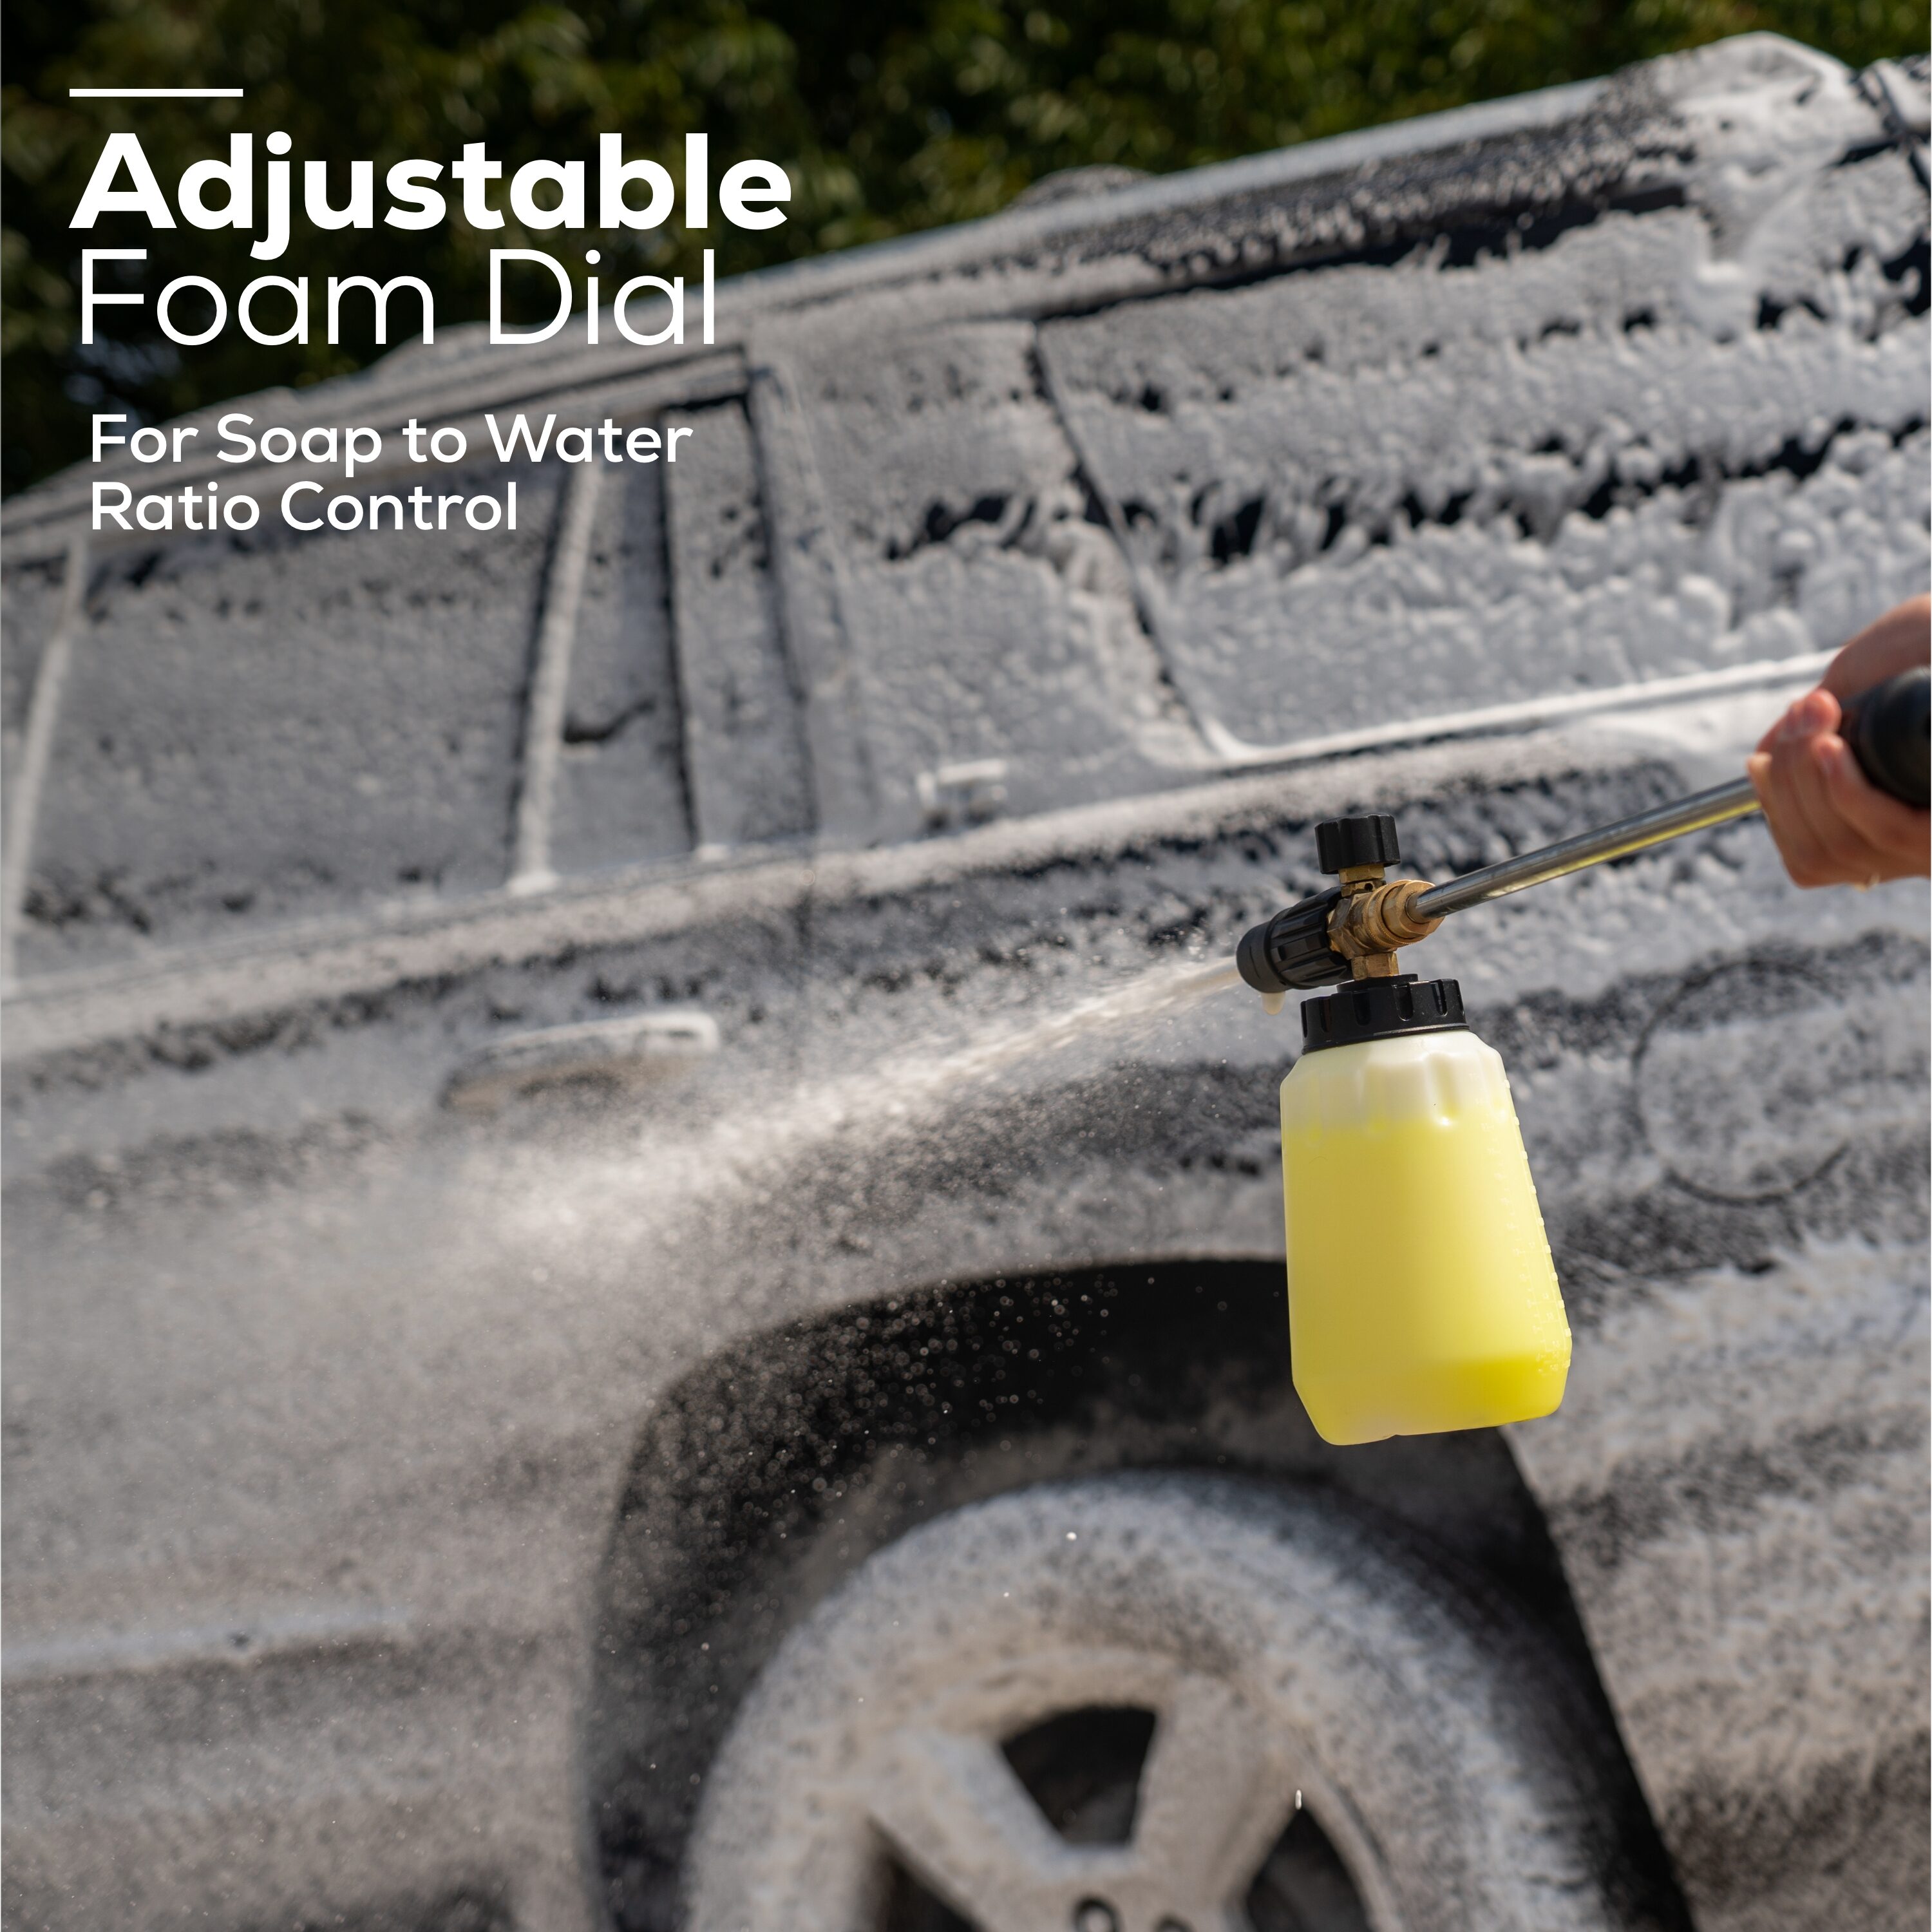 Foam Cannon for Garden Hose, Adjustment Ratio Dial Foam Gun, Car Wash Soap